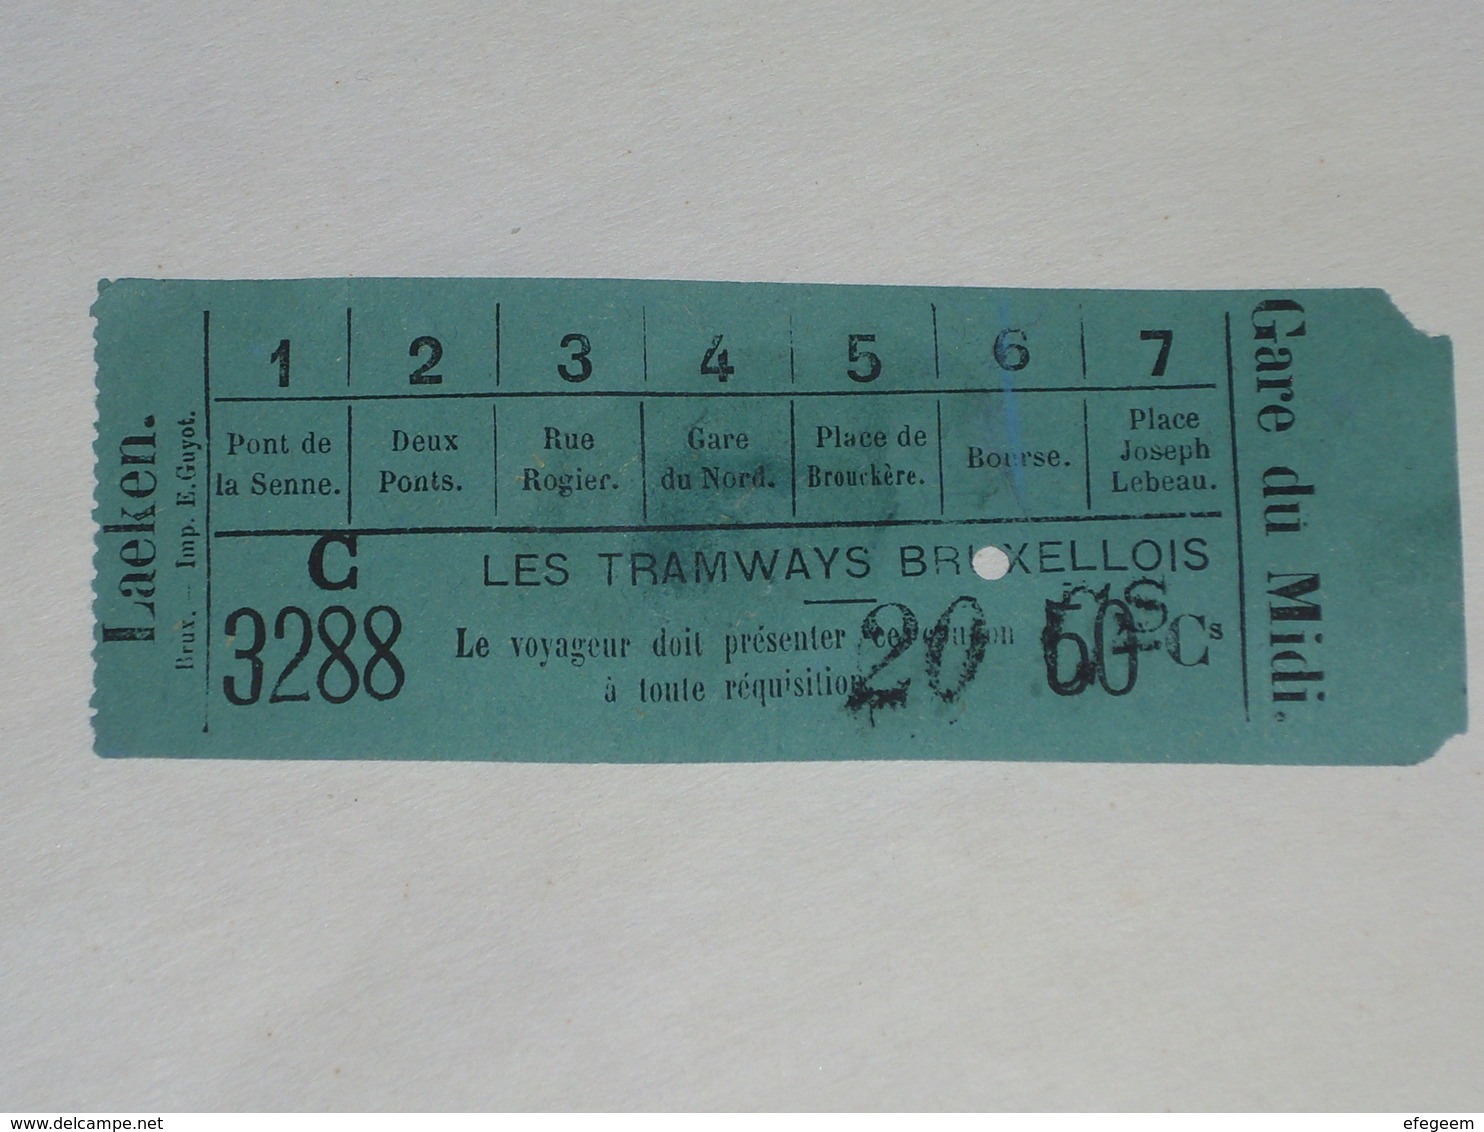 Ancien Ticket Tramway, Bruxelles Belgique.Ticket Autobus,Train, Metro. Surcharge. - Europe